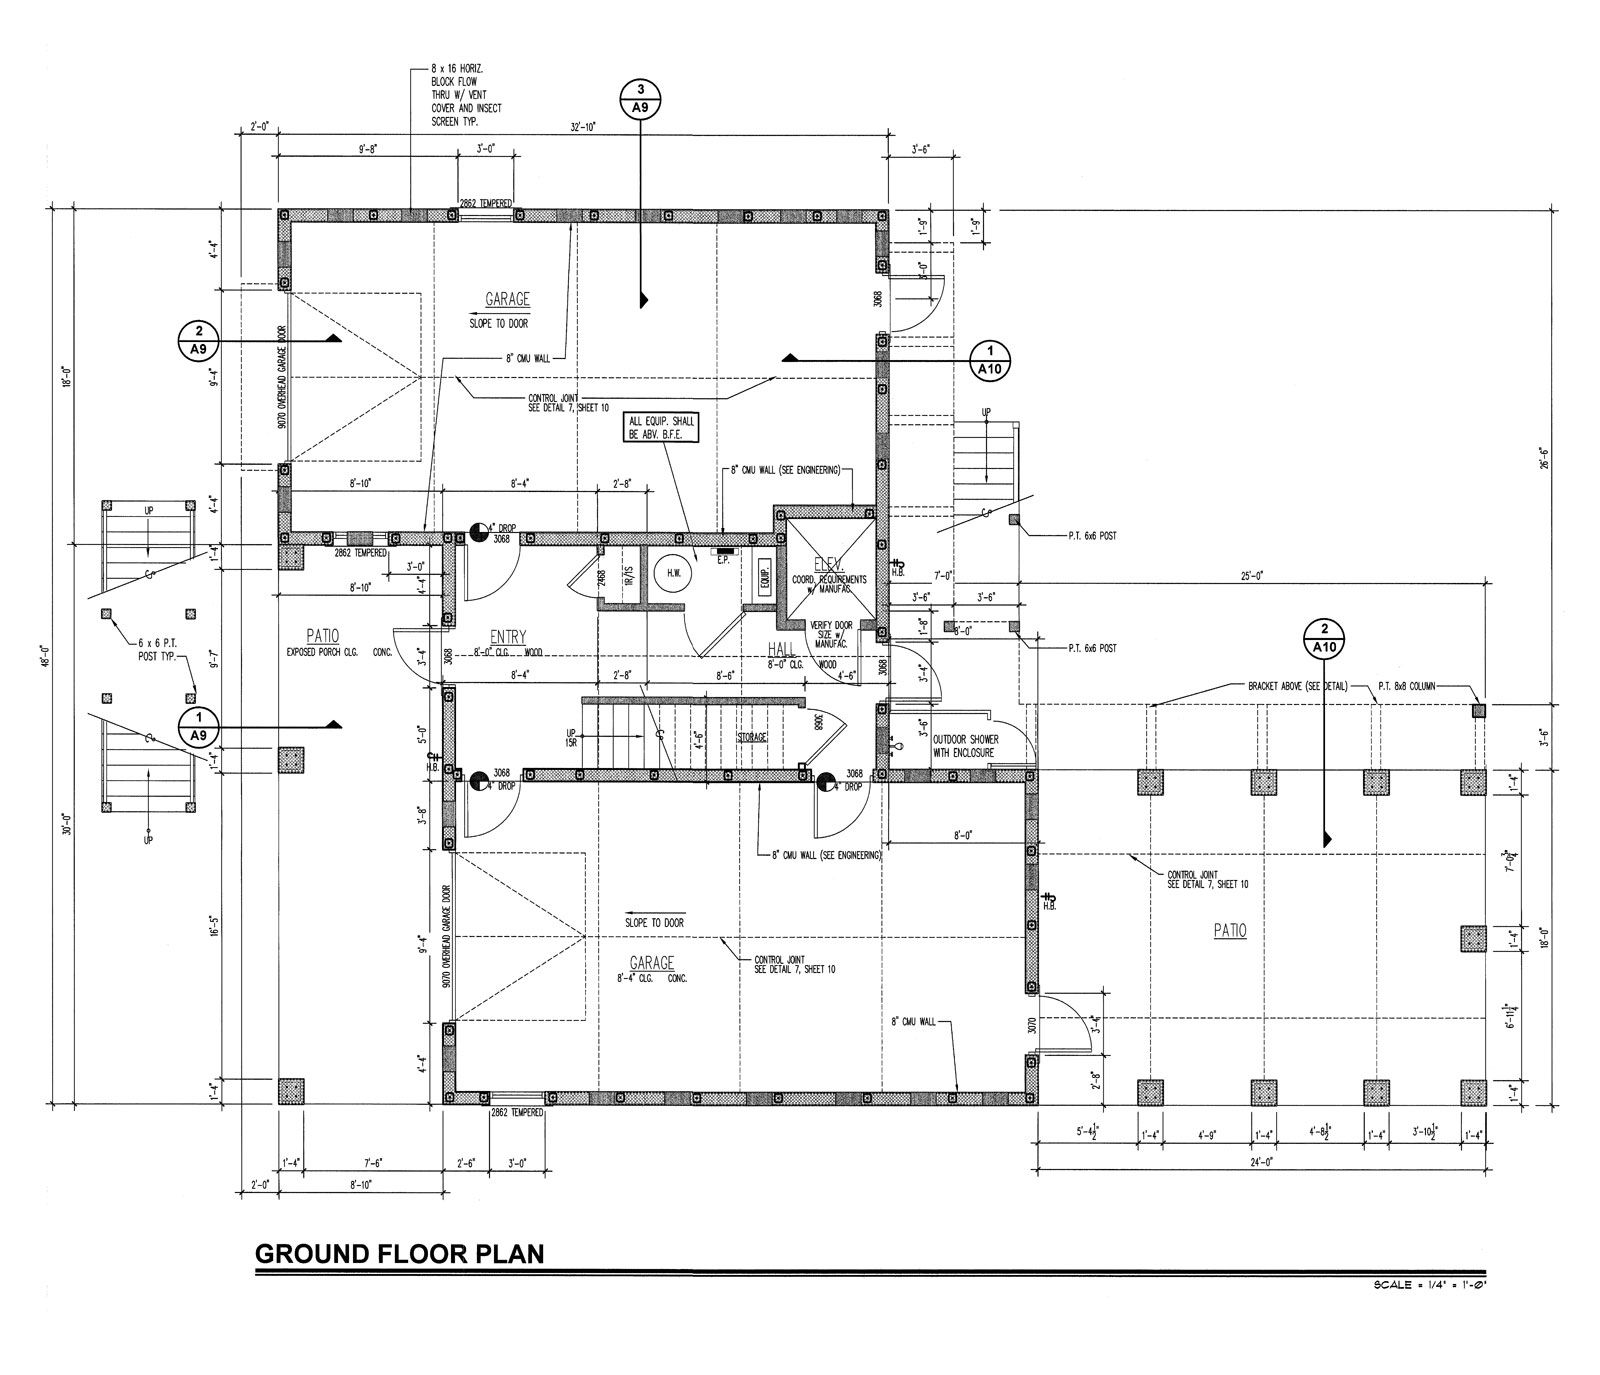 National modular homes network including modular home manufacturers ... -   Dream Homes Floor Plans